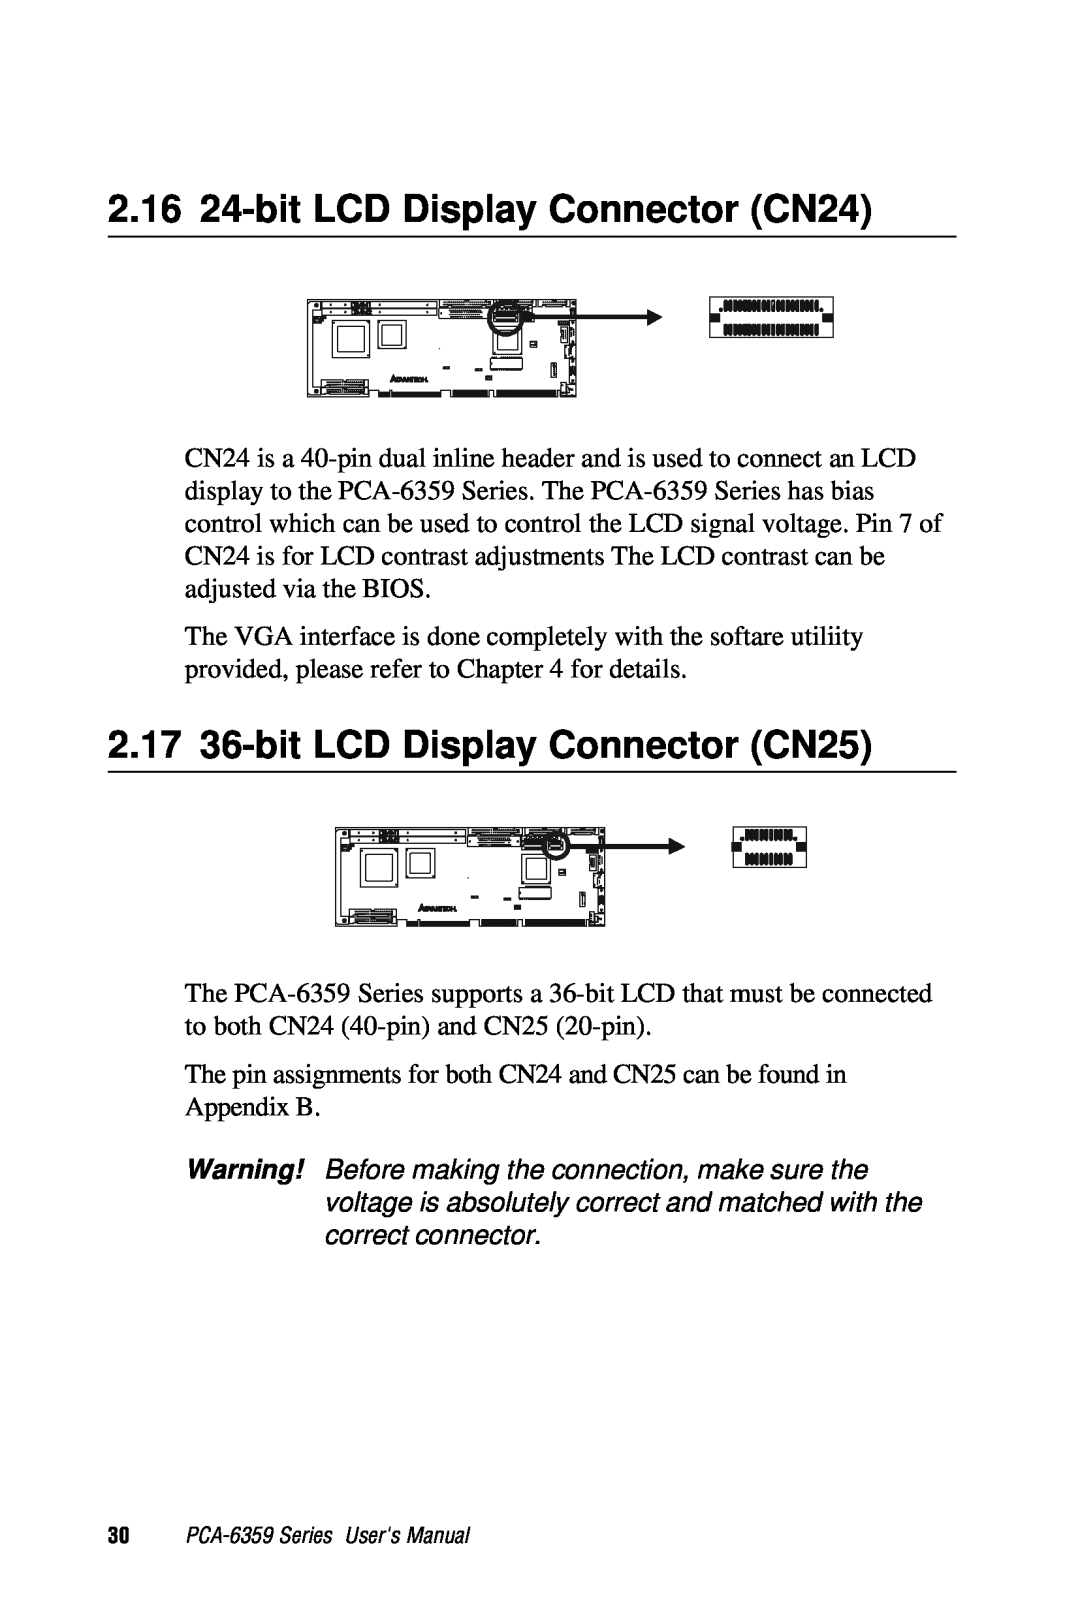 Advantech PCA-6359 user manual 2.16 24-bit LCD Display Connector CN24, 2.17 36-bit LCD Display Connector CN25 